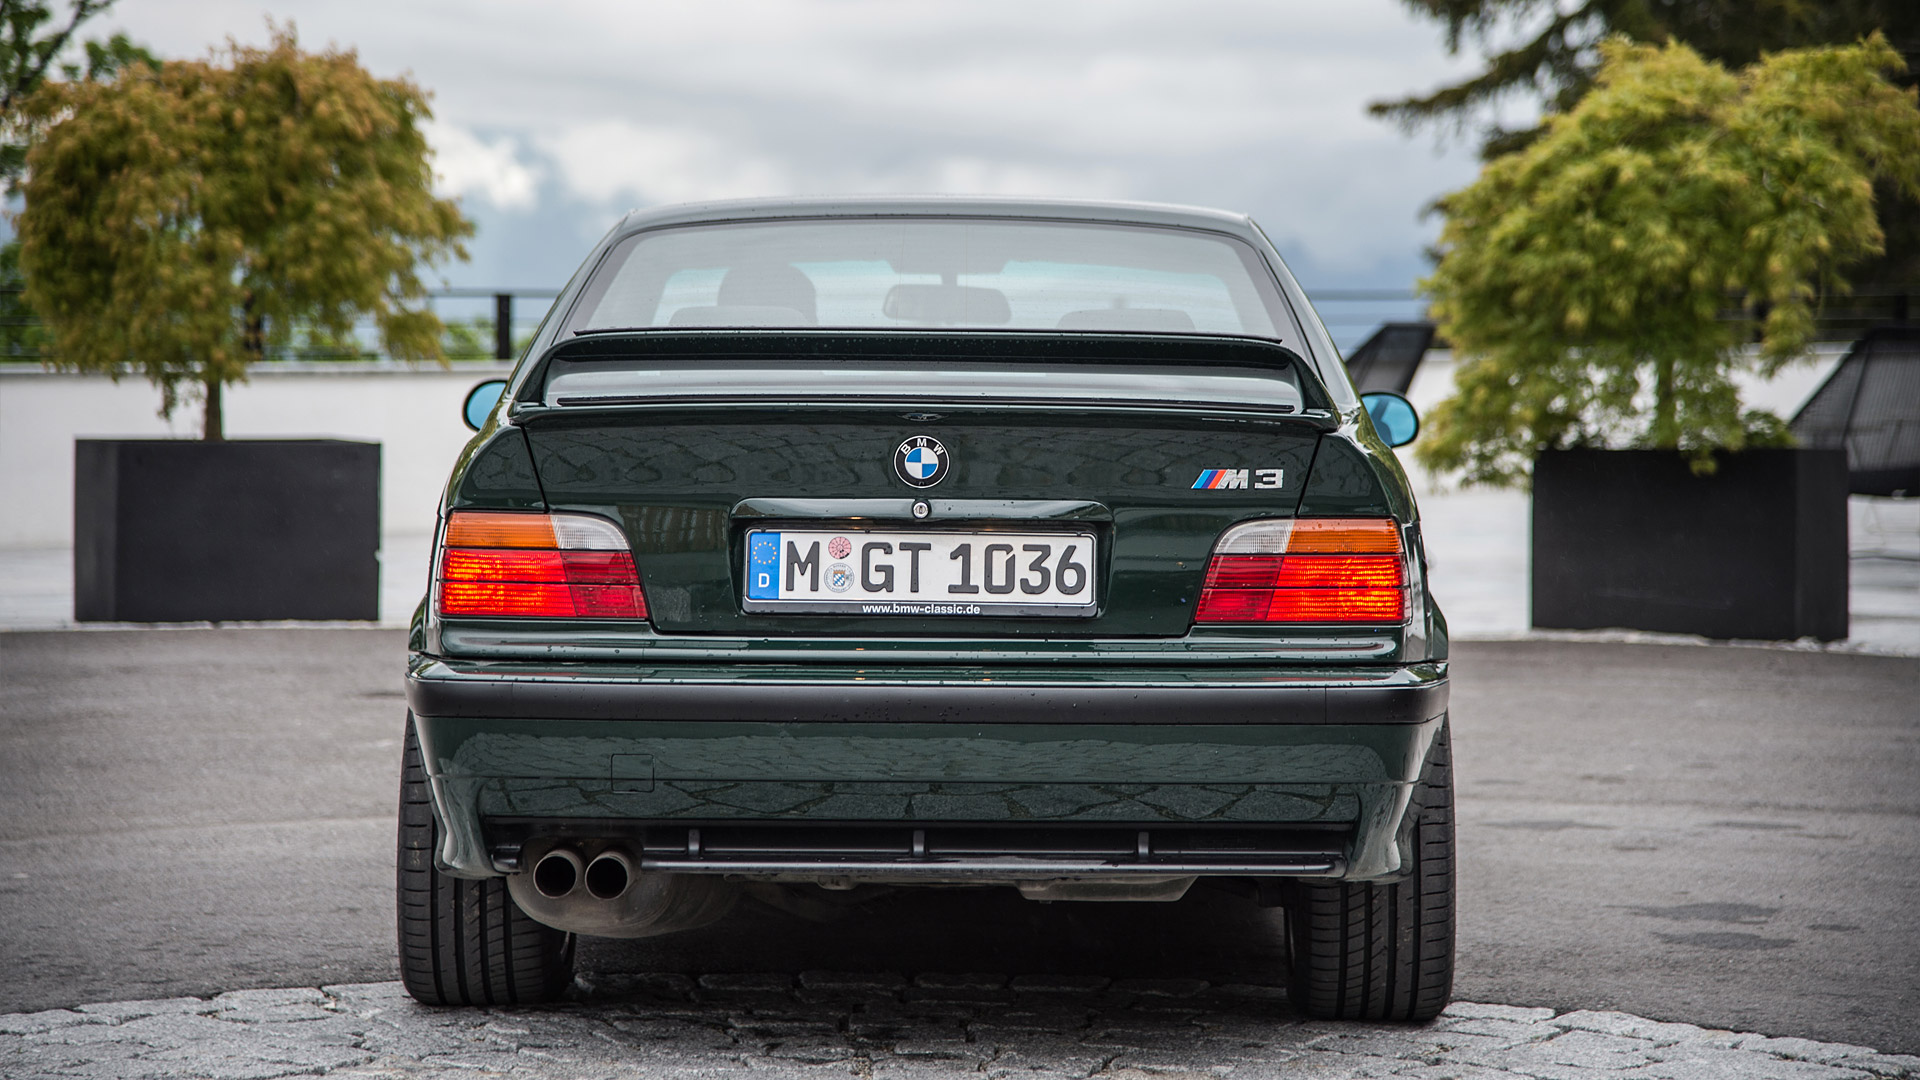  1995 BMW M3 GT Wallpaper.